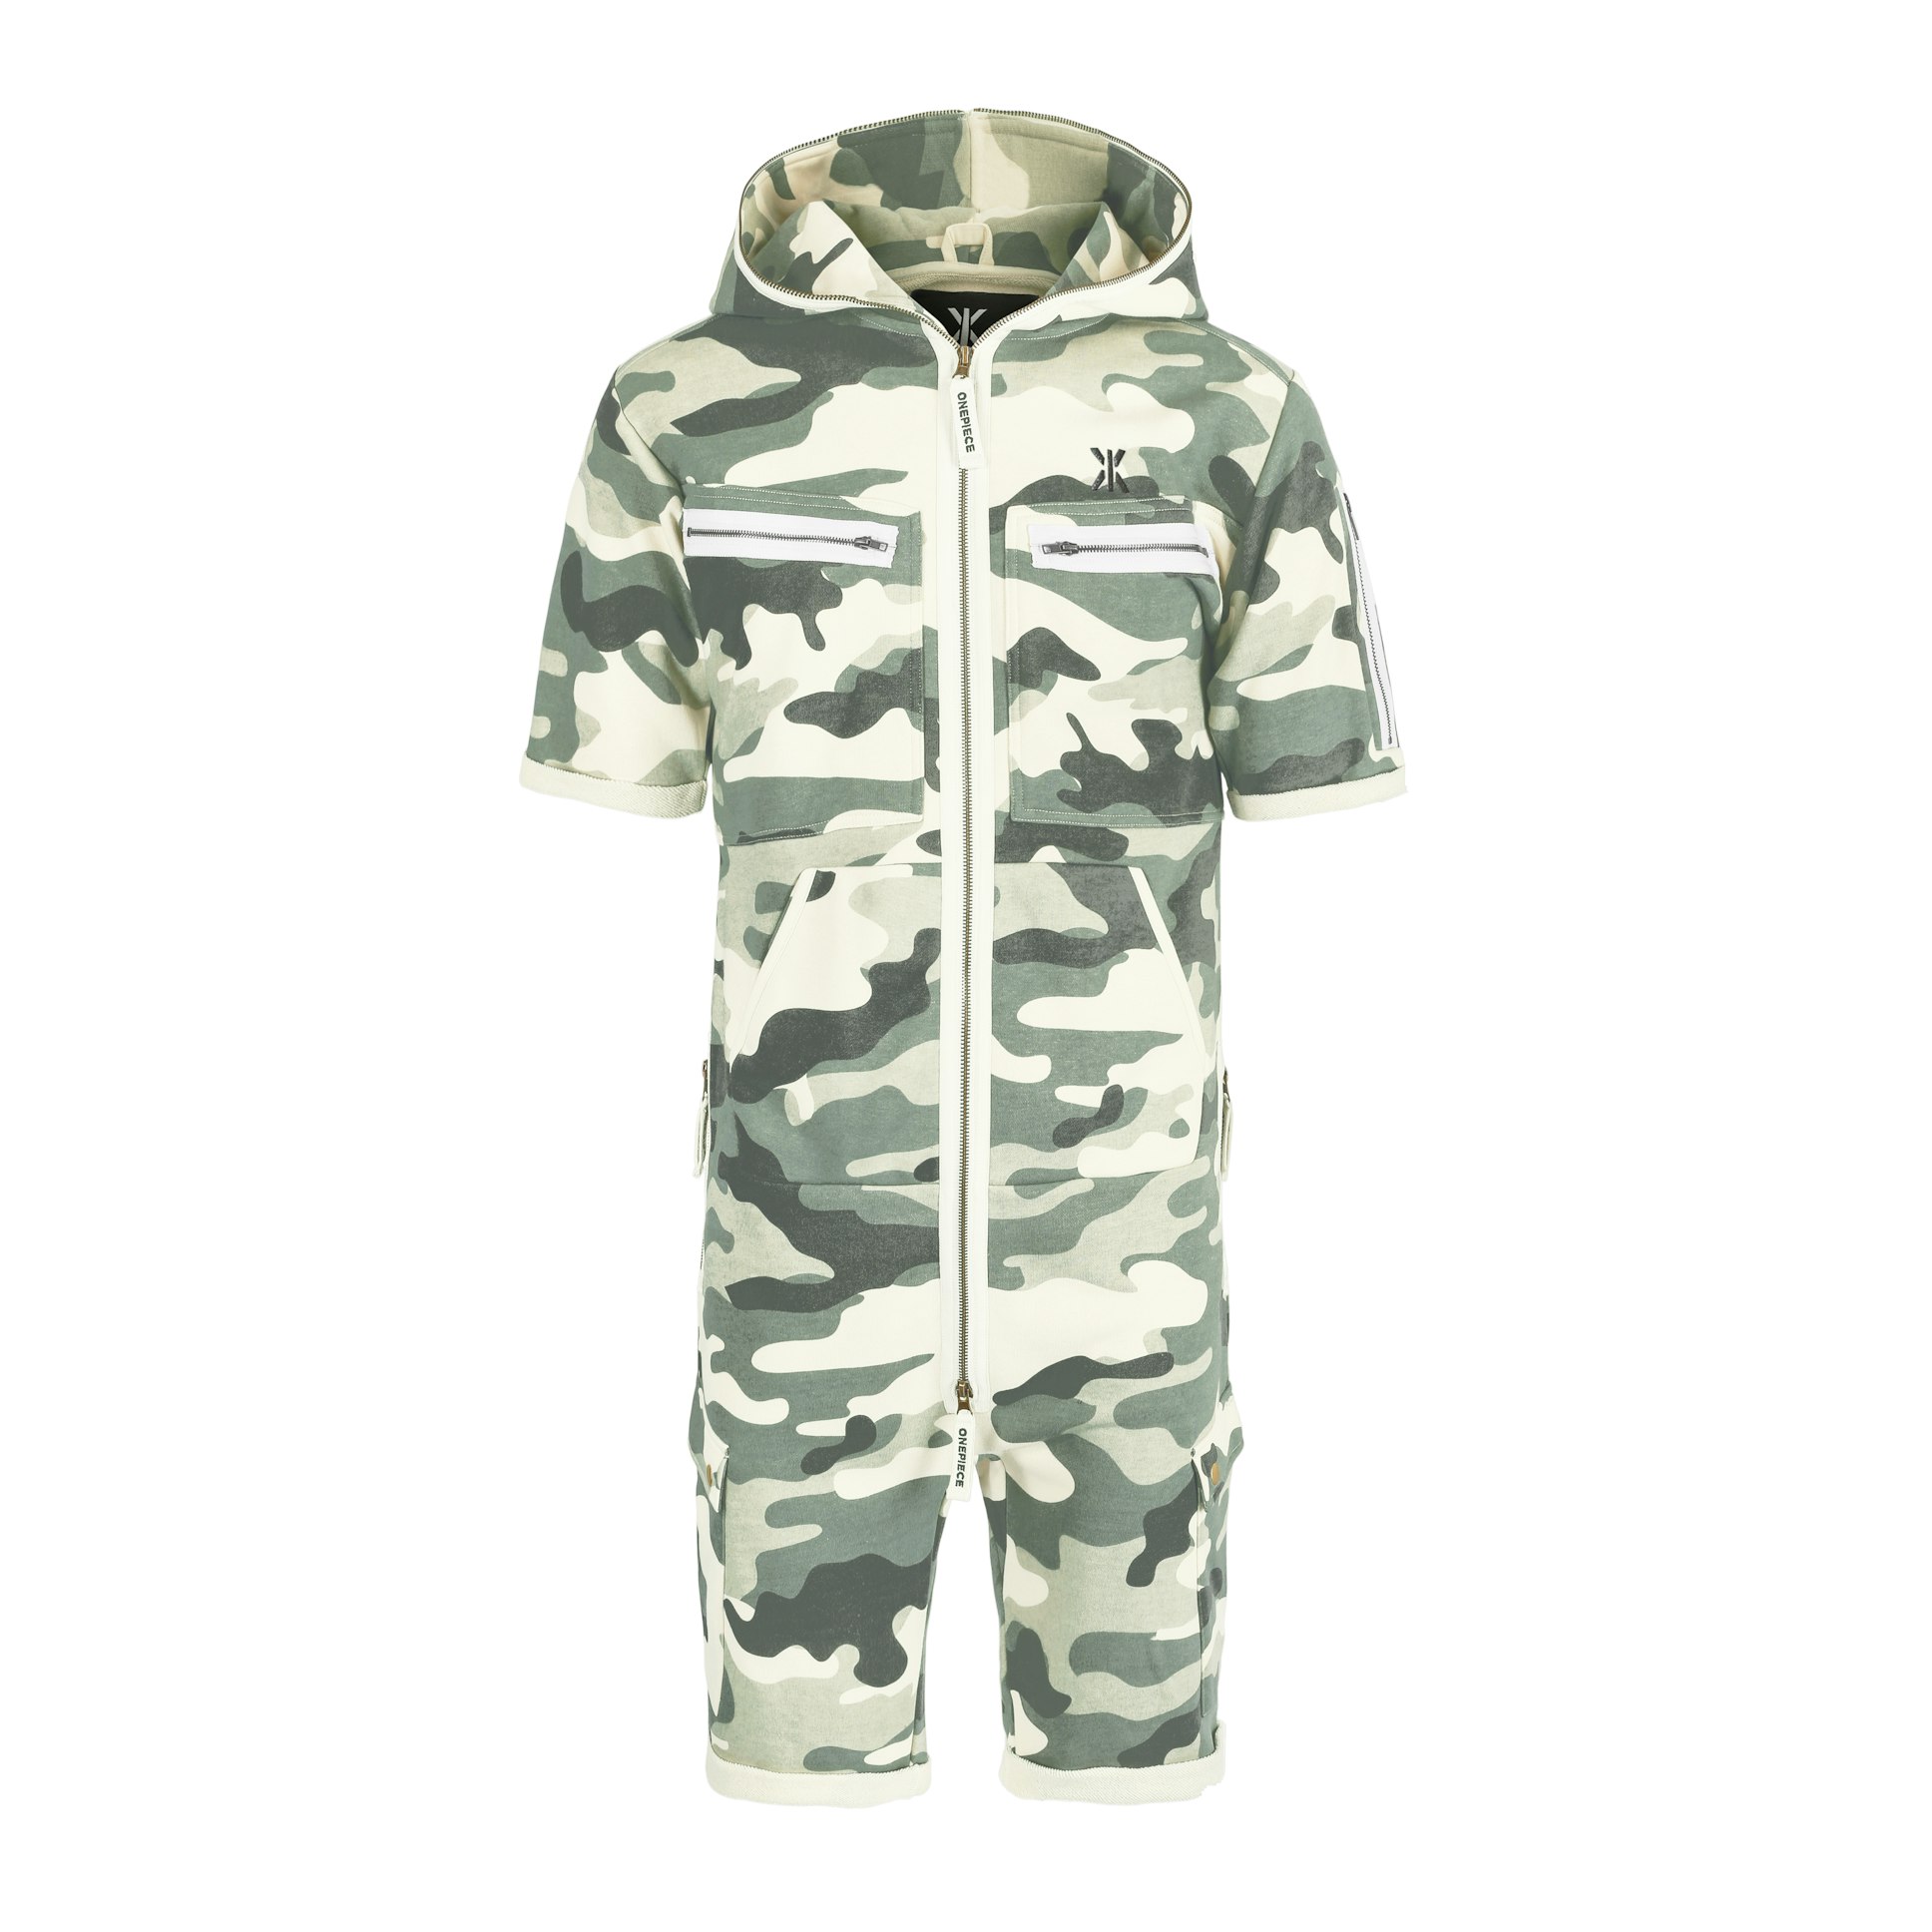 Cargo Short Jumpsuit Camouflage